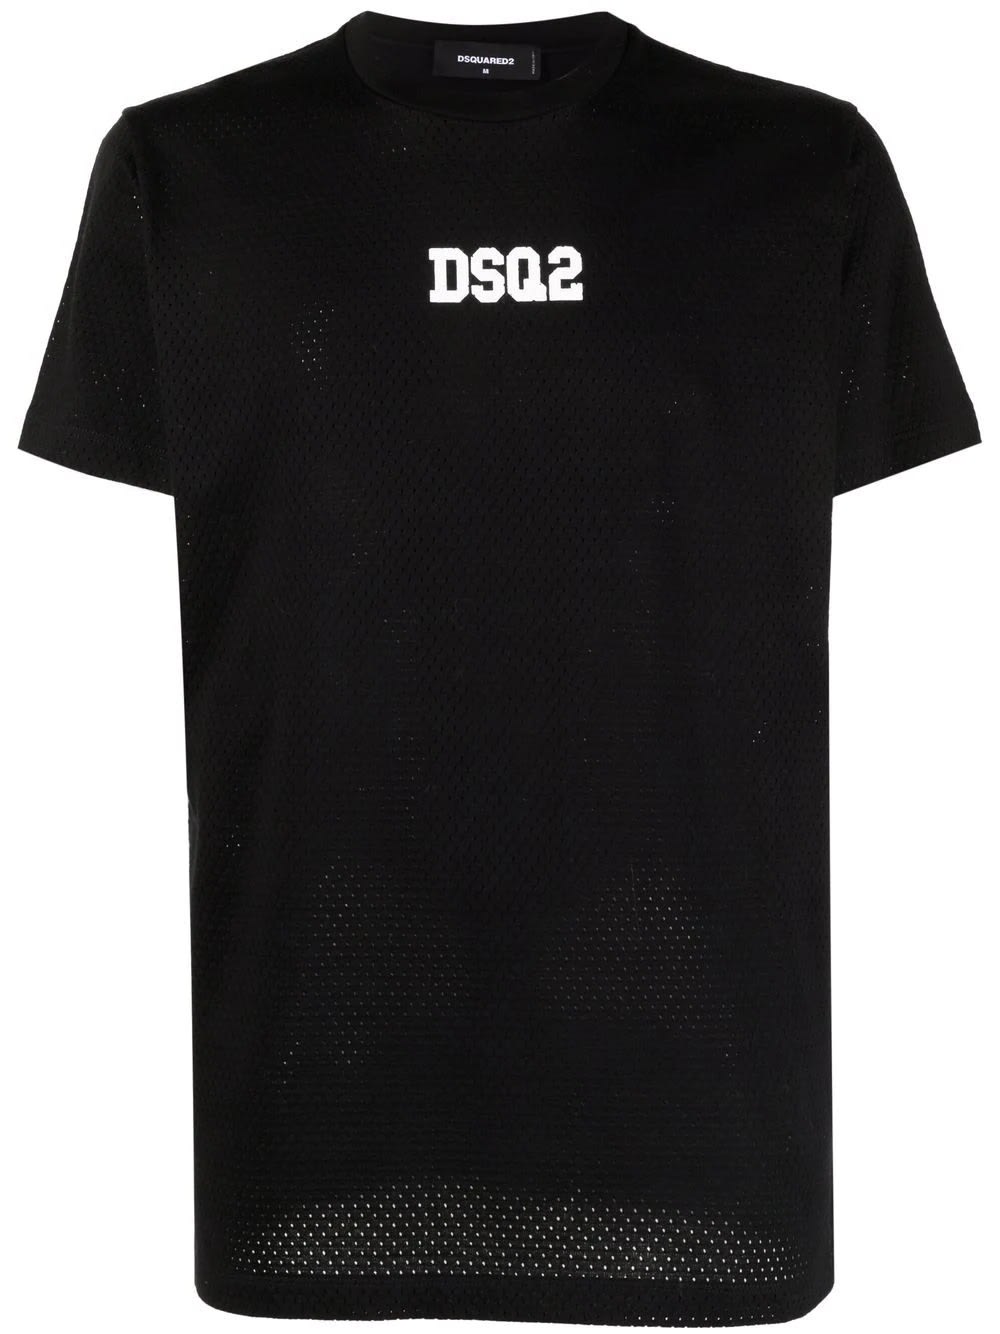 Dsquared2 Man Black Cotton Micro Mesh Dsq2 T-shirt